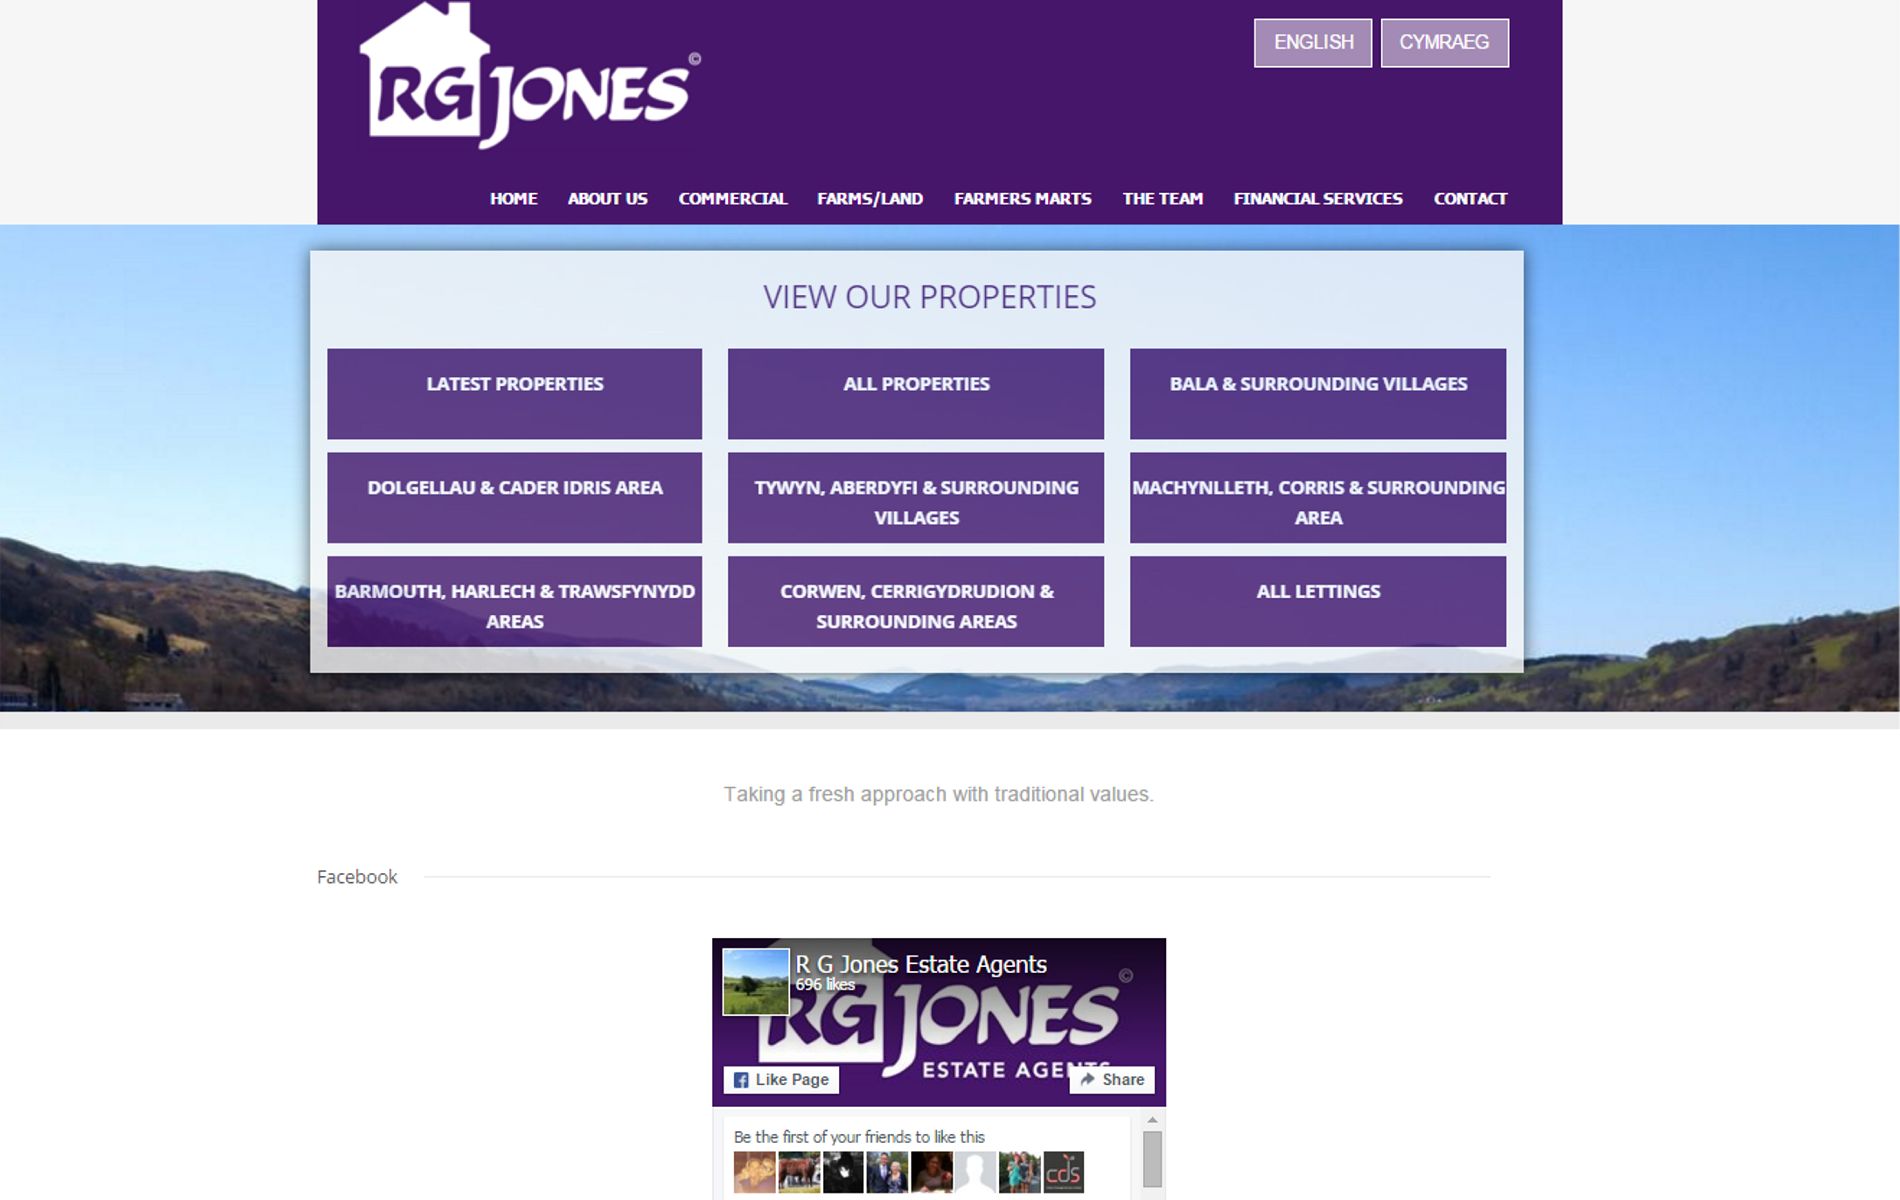 R G Jones website screenshot